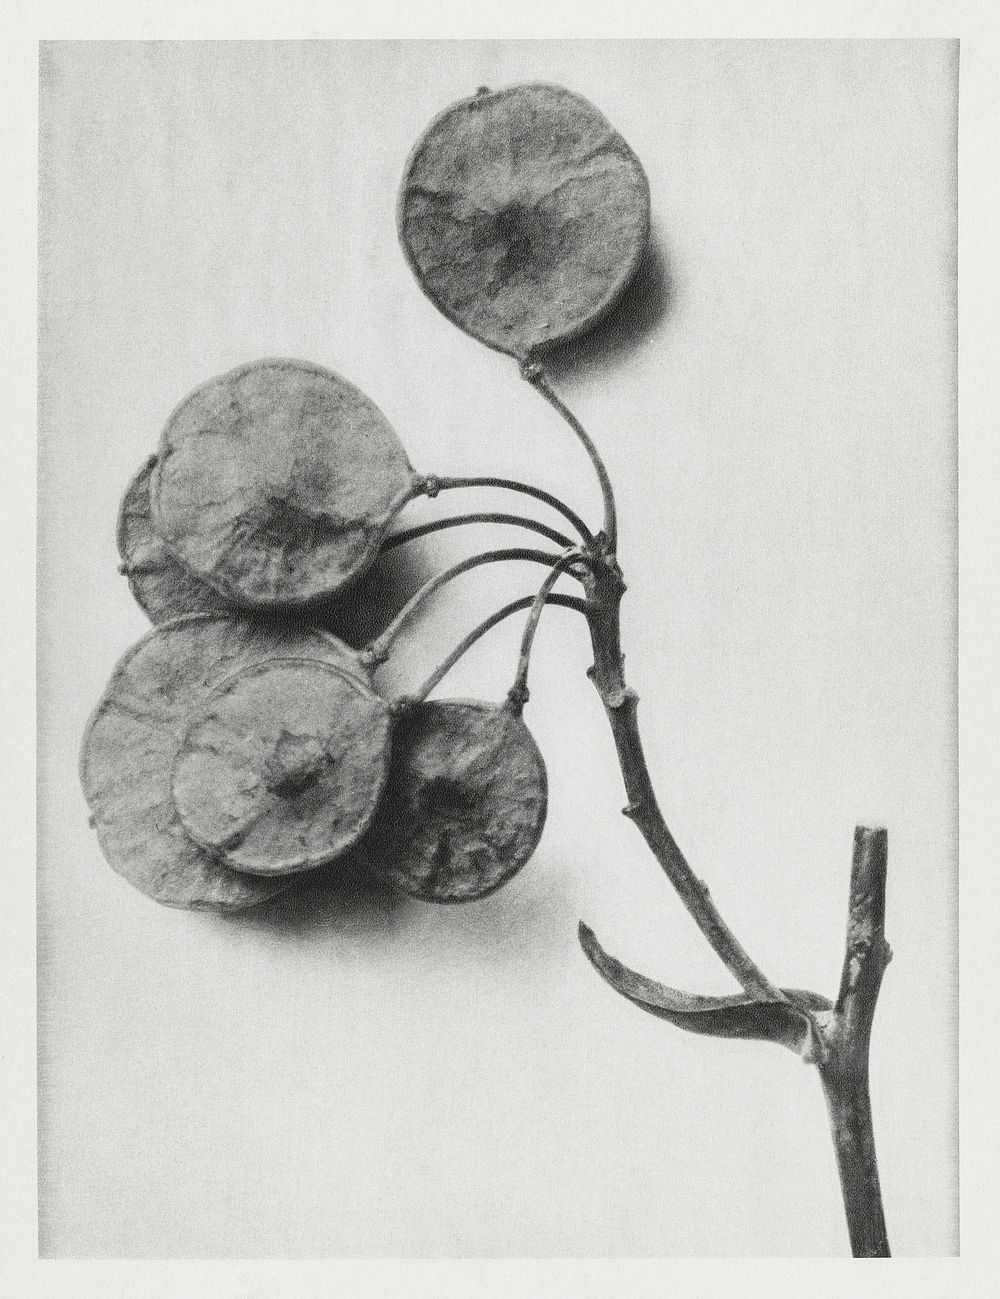 Ptelea Trifoliata (Common Hoptree) enlarged 6 times from Urformen der Kunst (1928) by Karl Blossfeldt. Original from The…